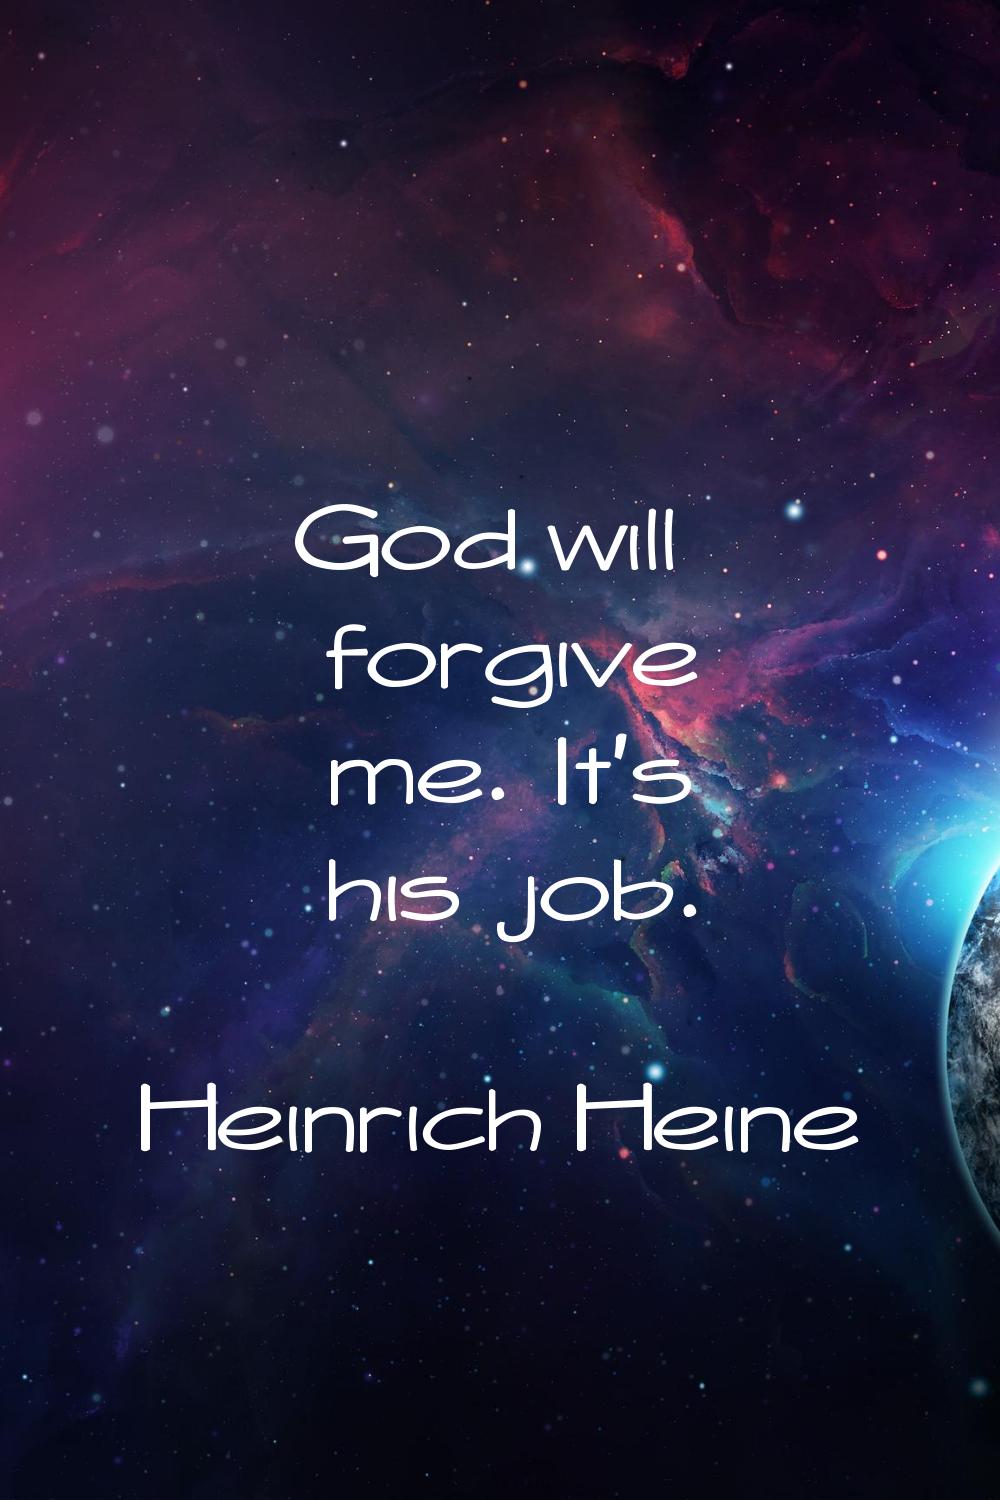 God will forgive me. It's his job.